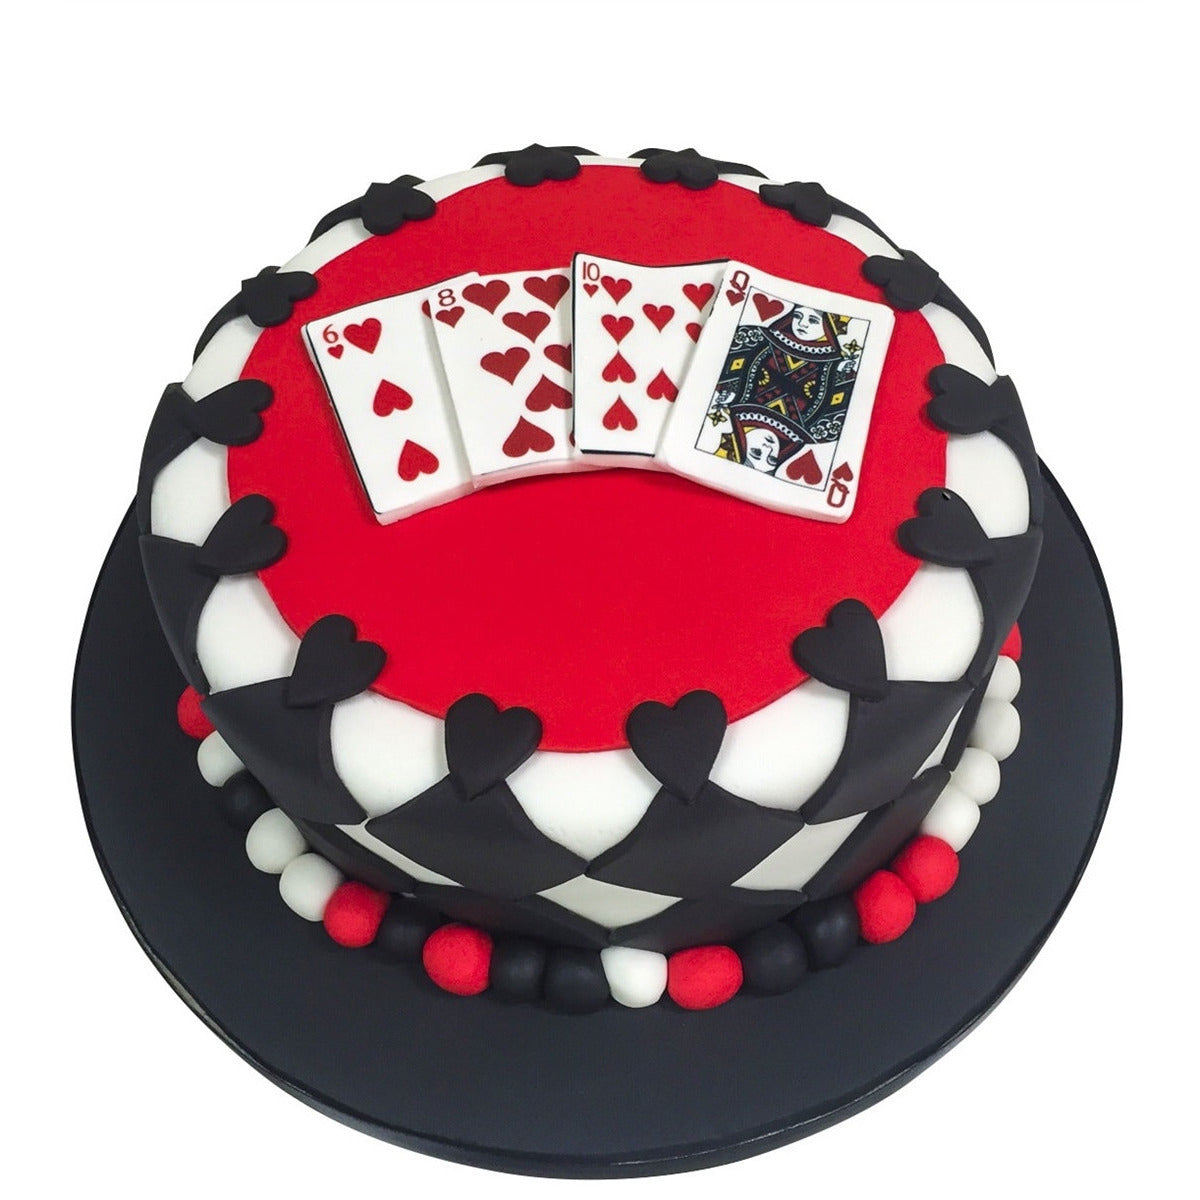 Texas hold'em poker table cake... - Shereen's Cakes & Bakes | Facebook